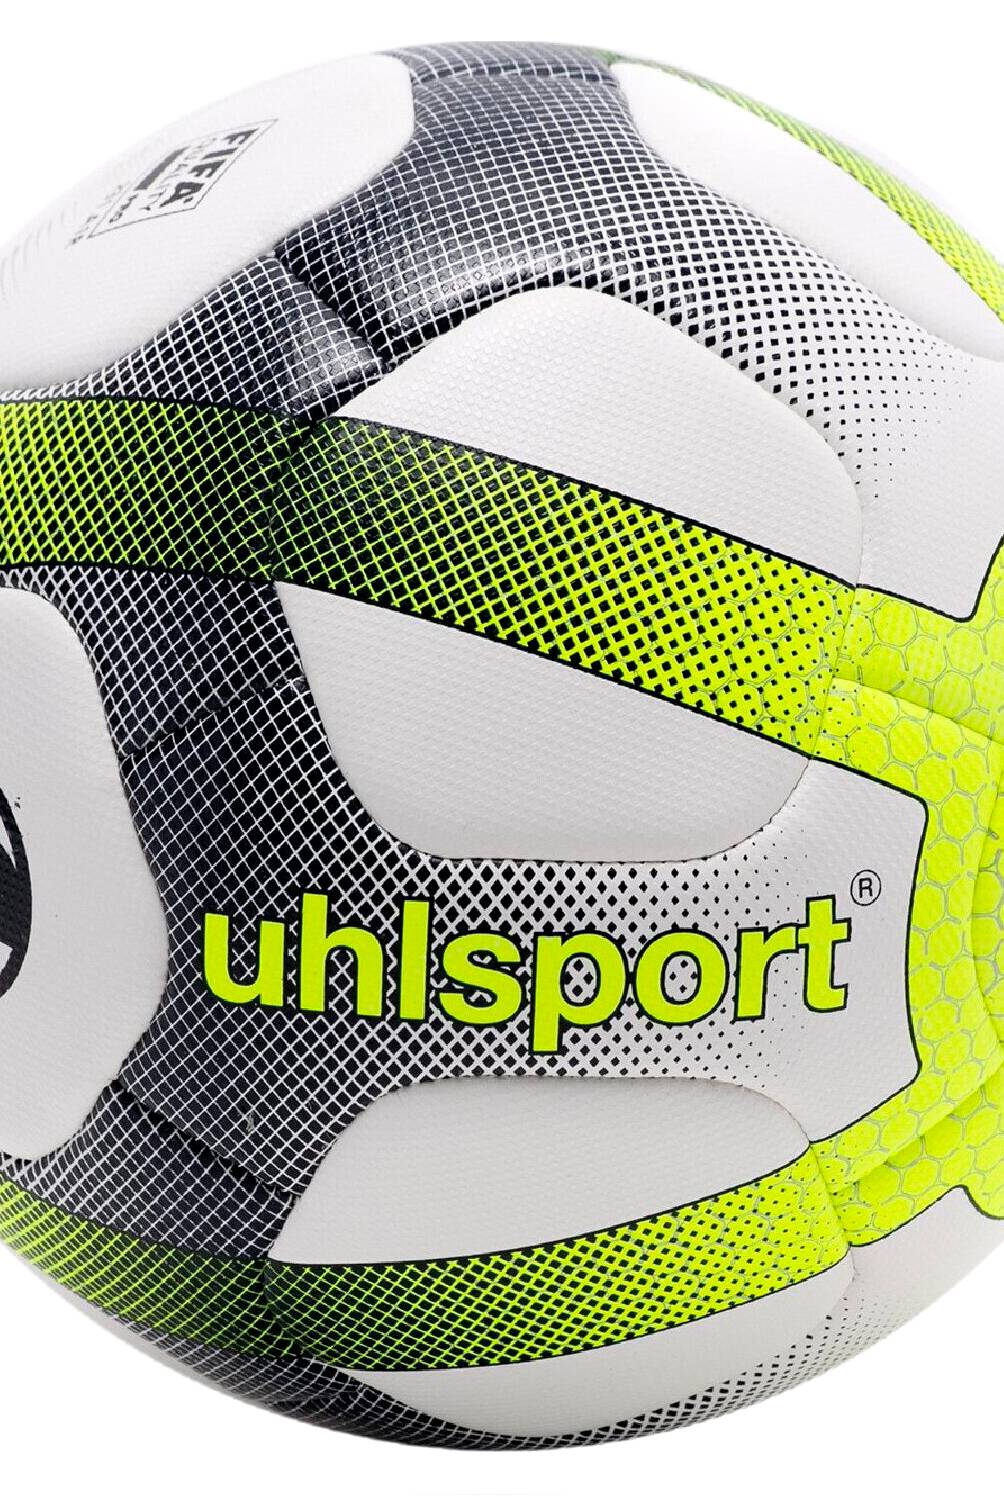 UHLSPORT - Balon  de Futbol Uhlsport Elysia Match N5